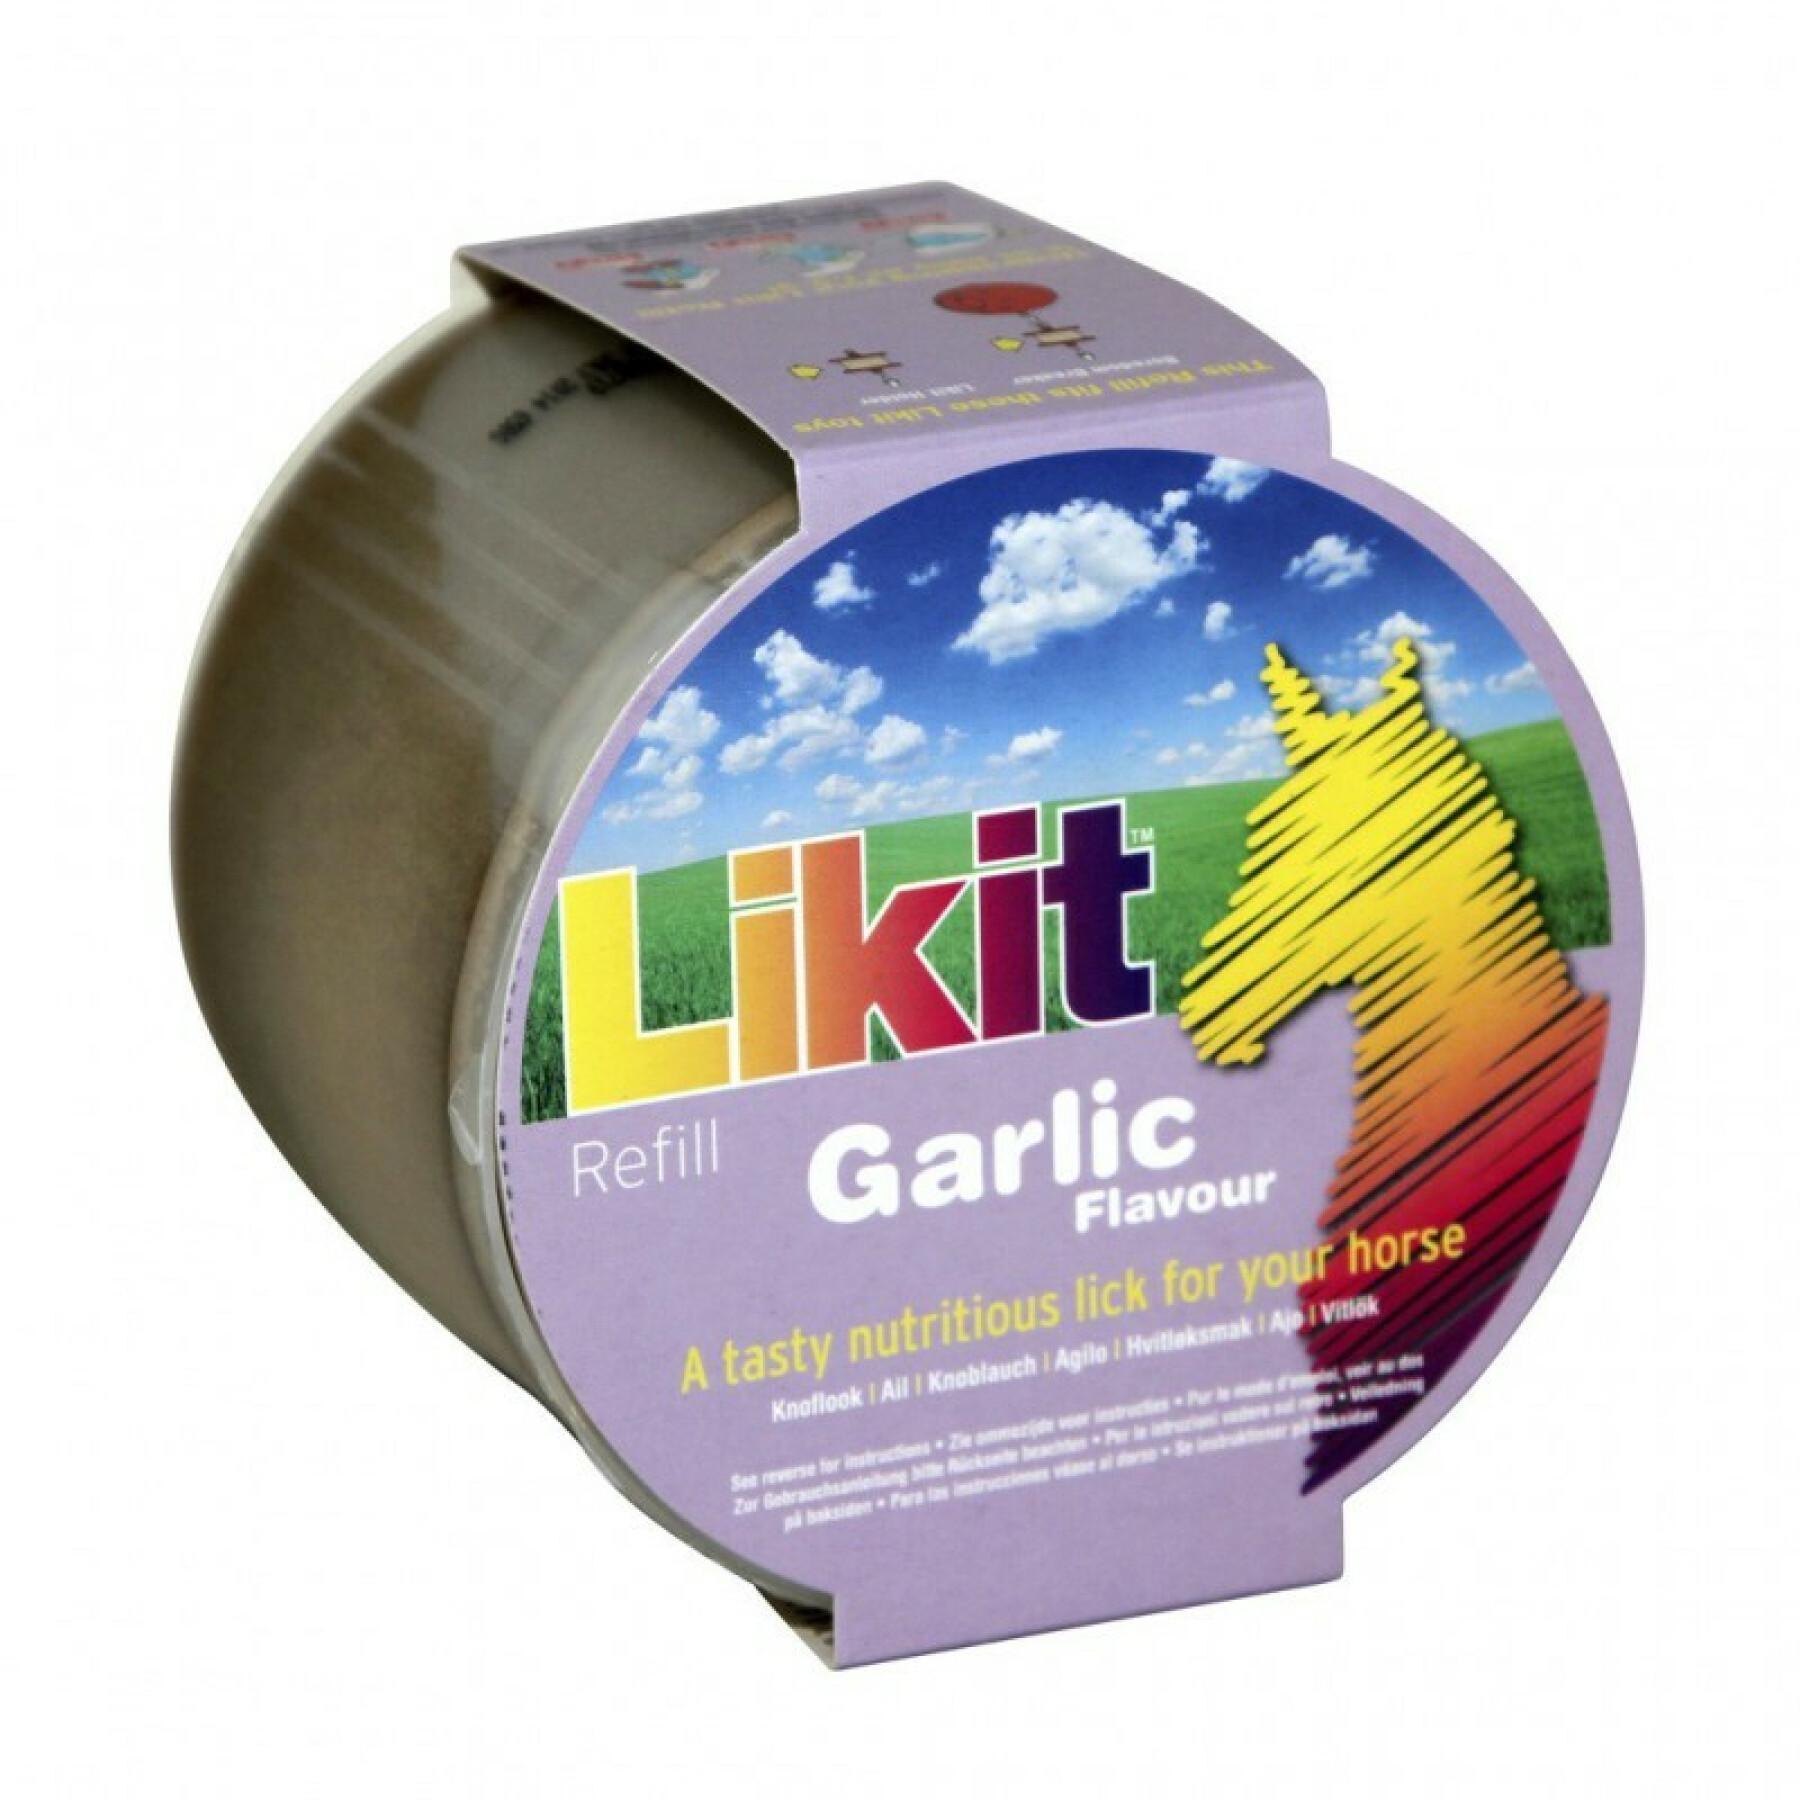 Garlic flavored treats LiKit